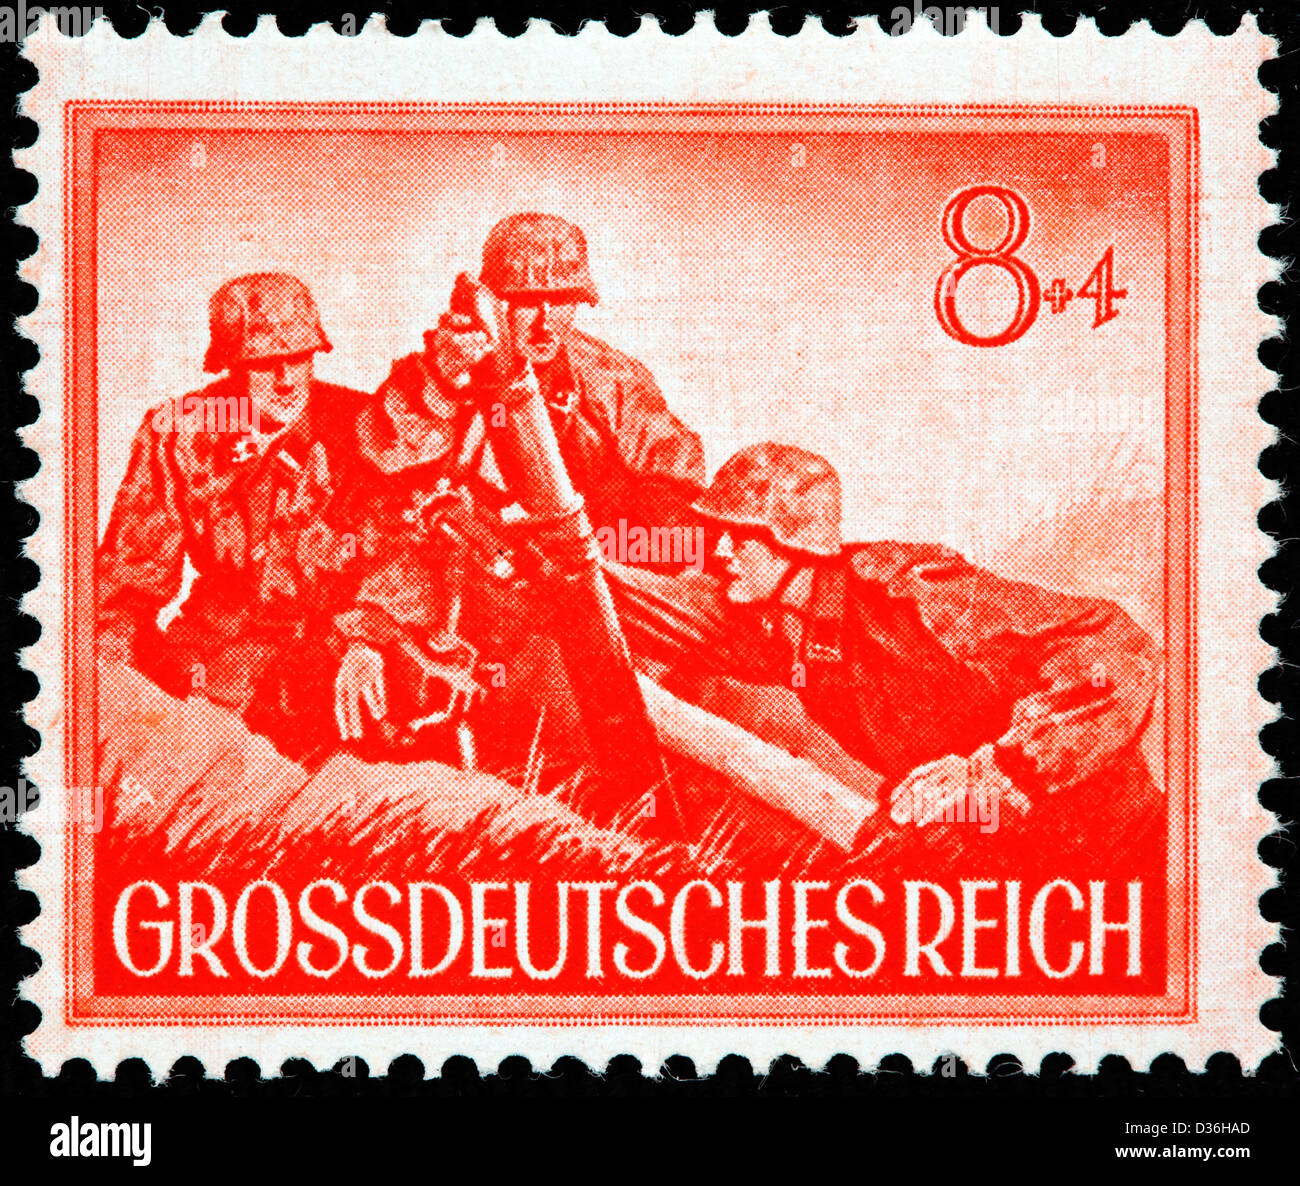 Schutz-Staffel - lance-grenades, timbre-poste, Allemagne, 1944 Banque D'Images